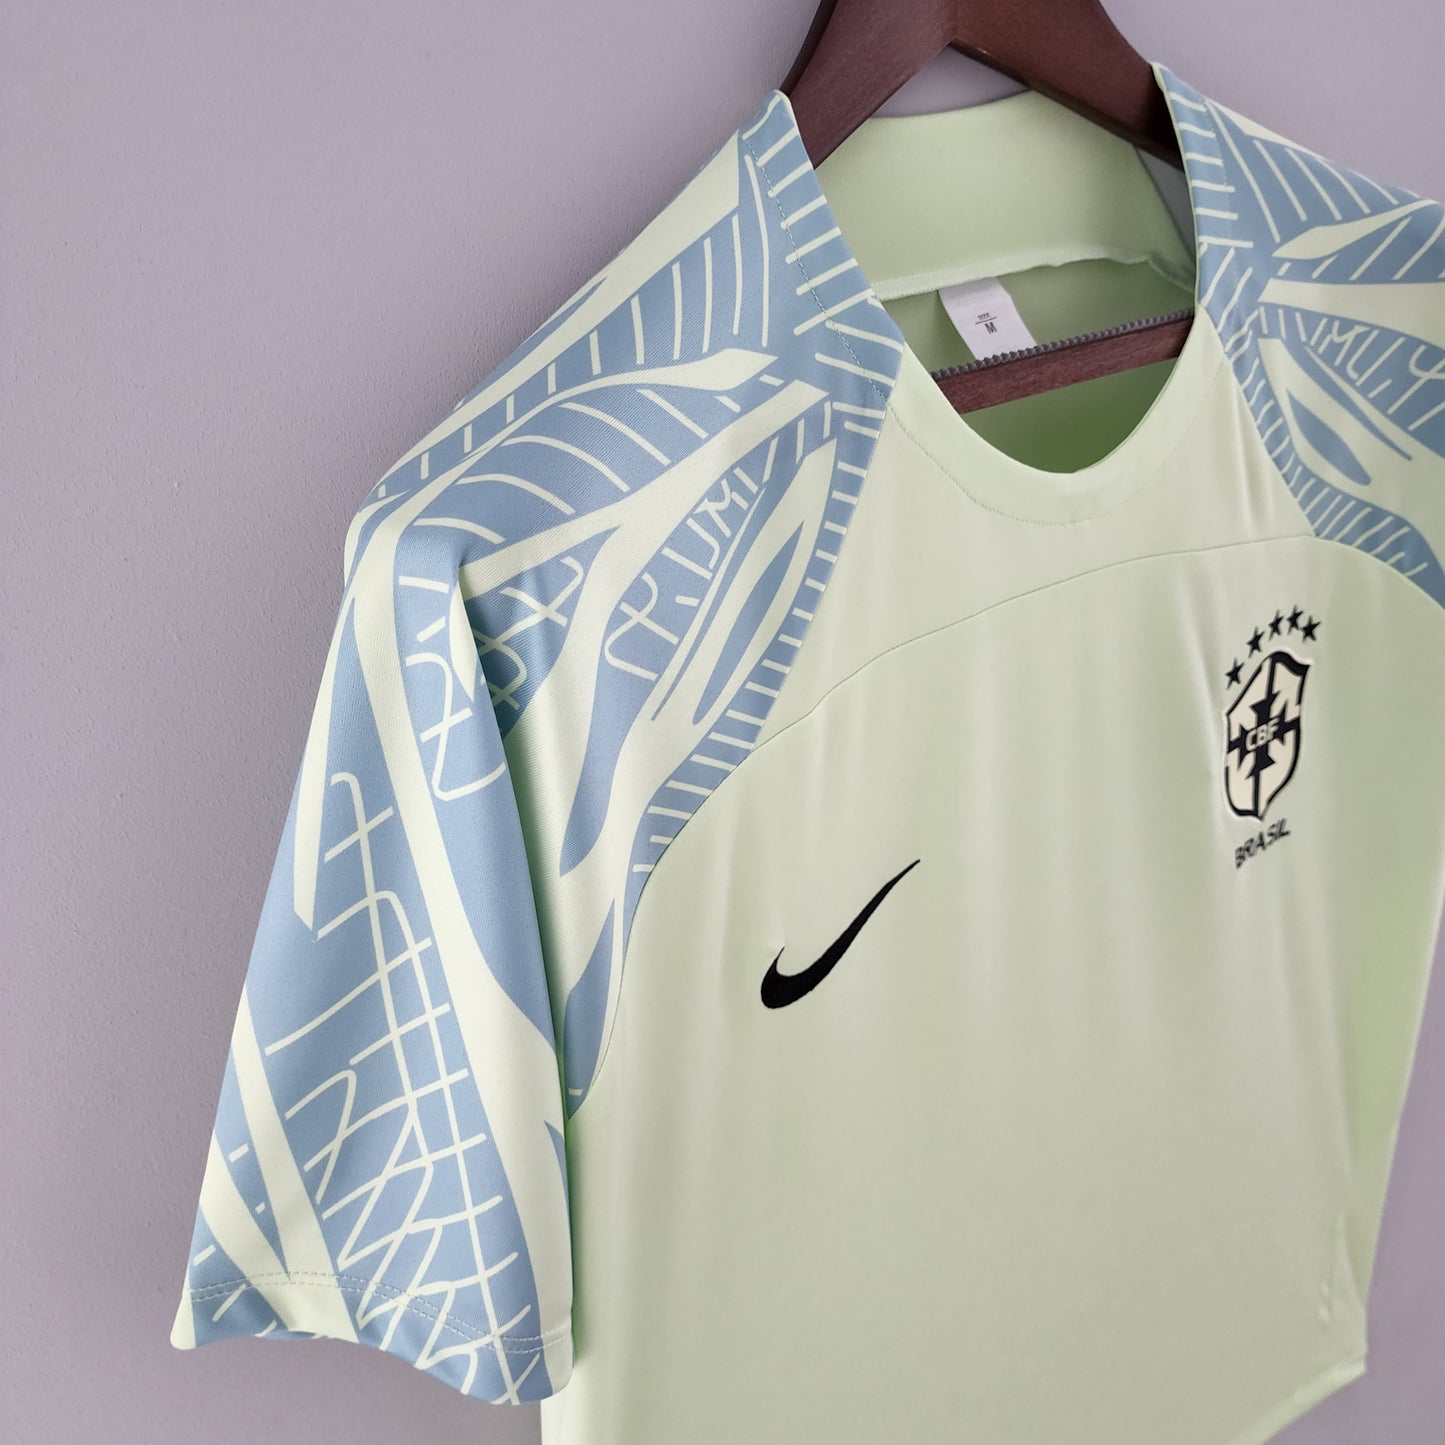 Camisa Torcedor Brasil Treino Copa do Mundo 2022